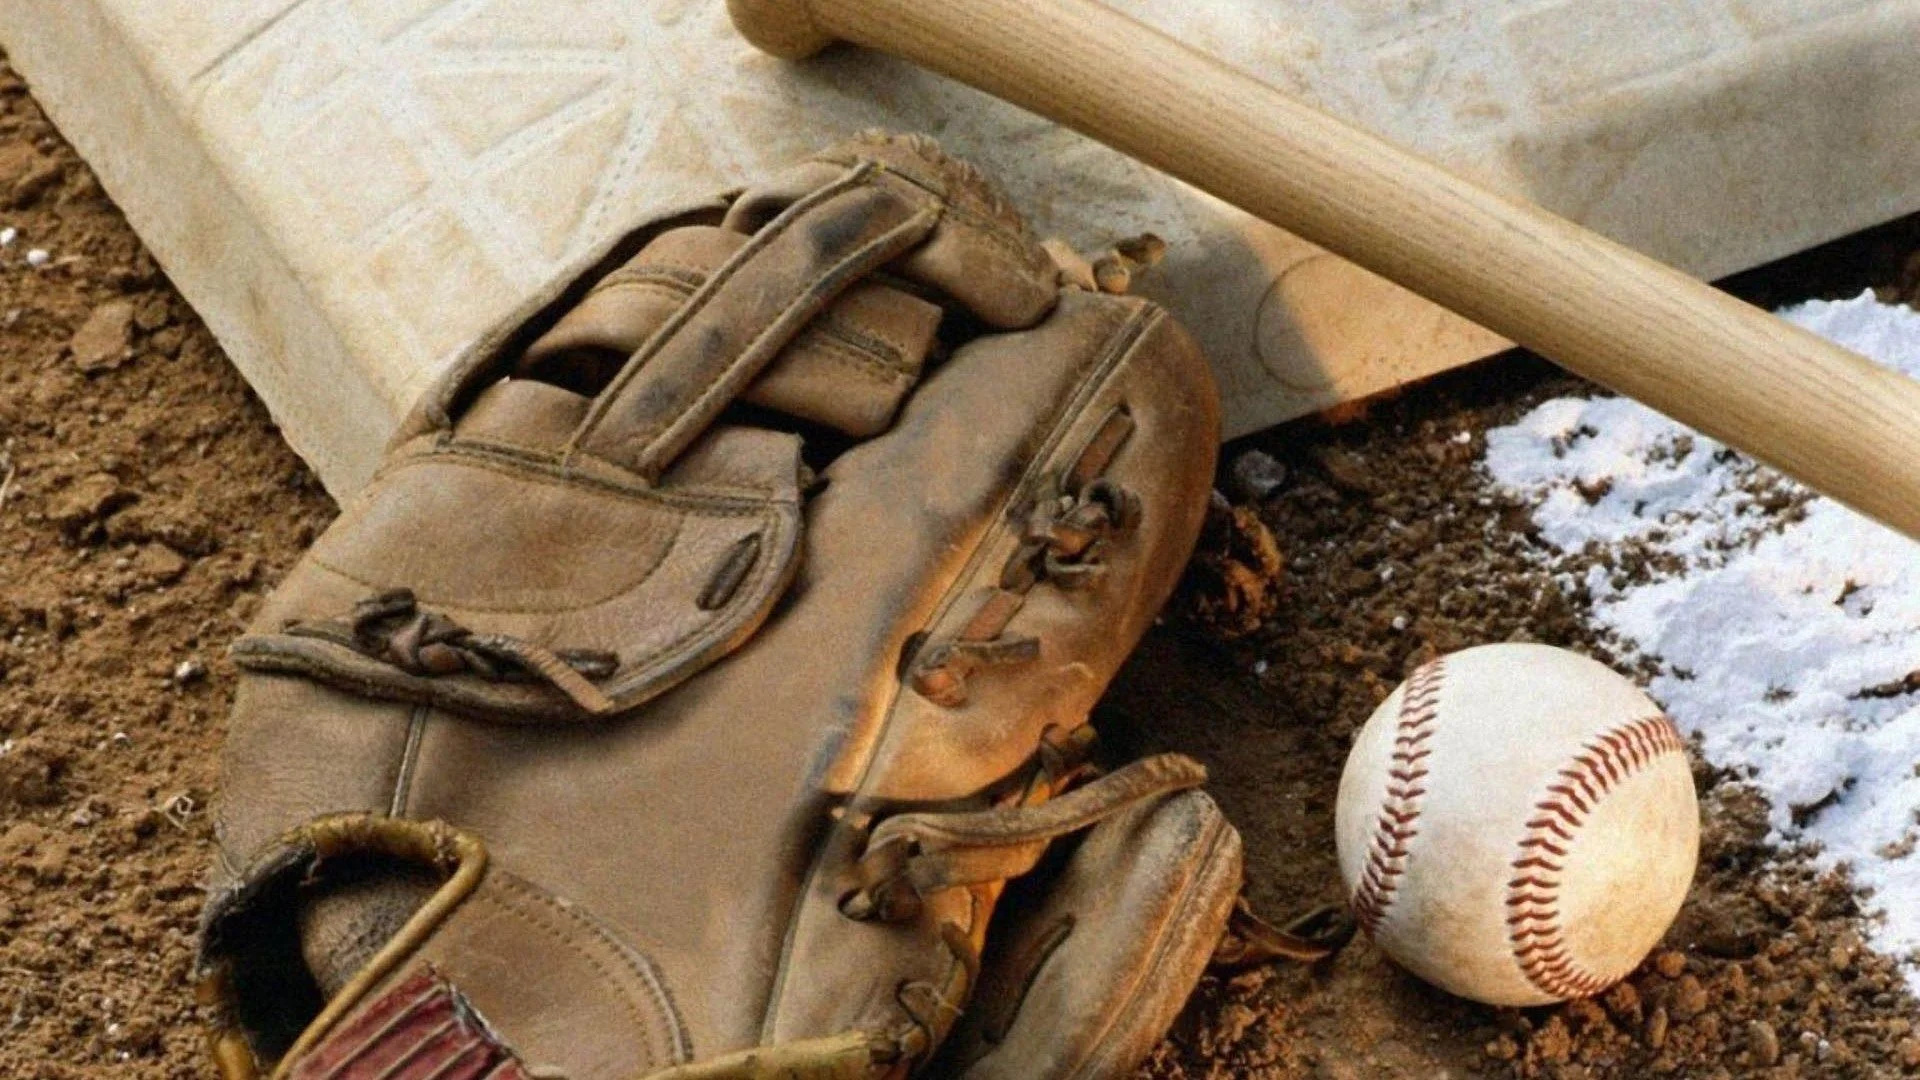 Softball: A bat, a ball and a glove - competitive sports equipment. 1920x1080 Full HD Wallpaper.